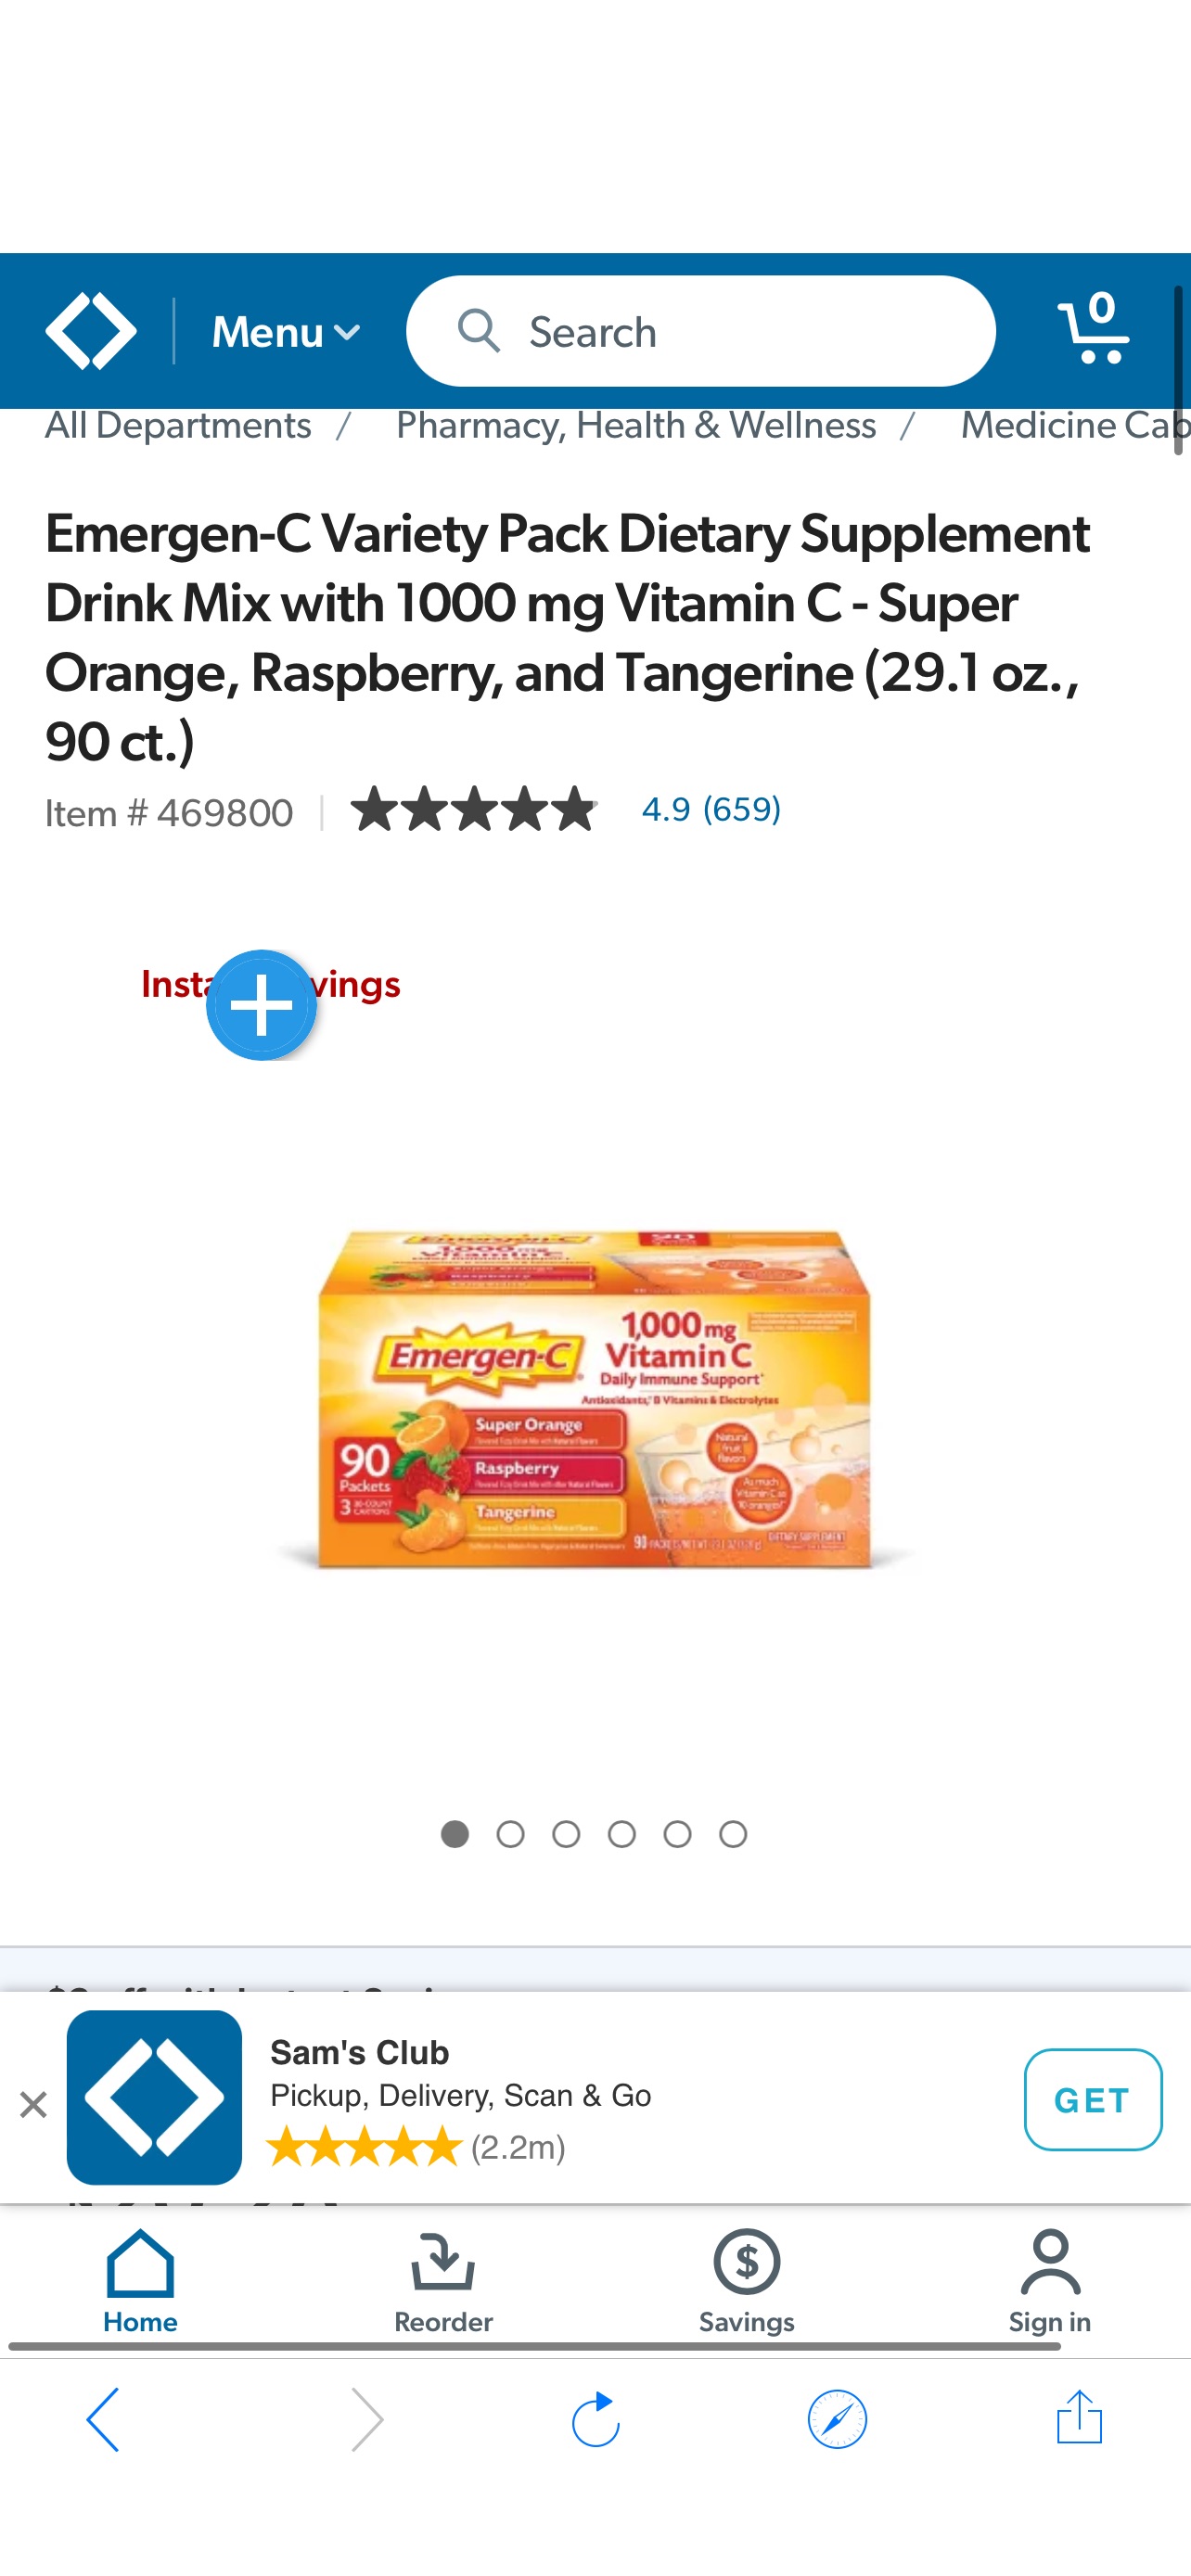 Emergen-C Variety Pack Dietary Supplement Drink Mix with 1000 mg Vitamin C - Super Orange, Raspberry, and Tangerine (29.1 oz., 90 ct.) - Sam's Club